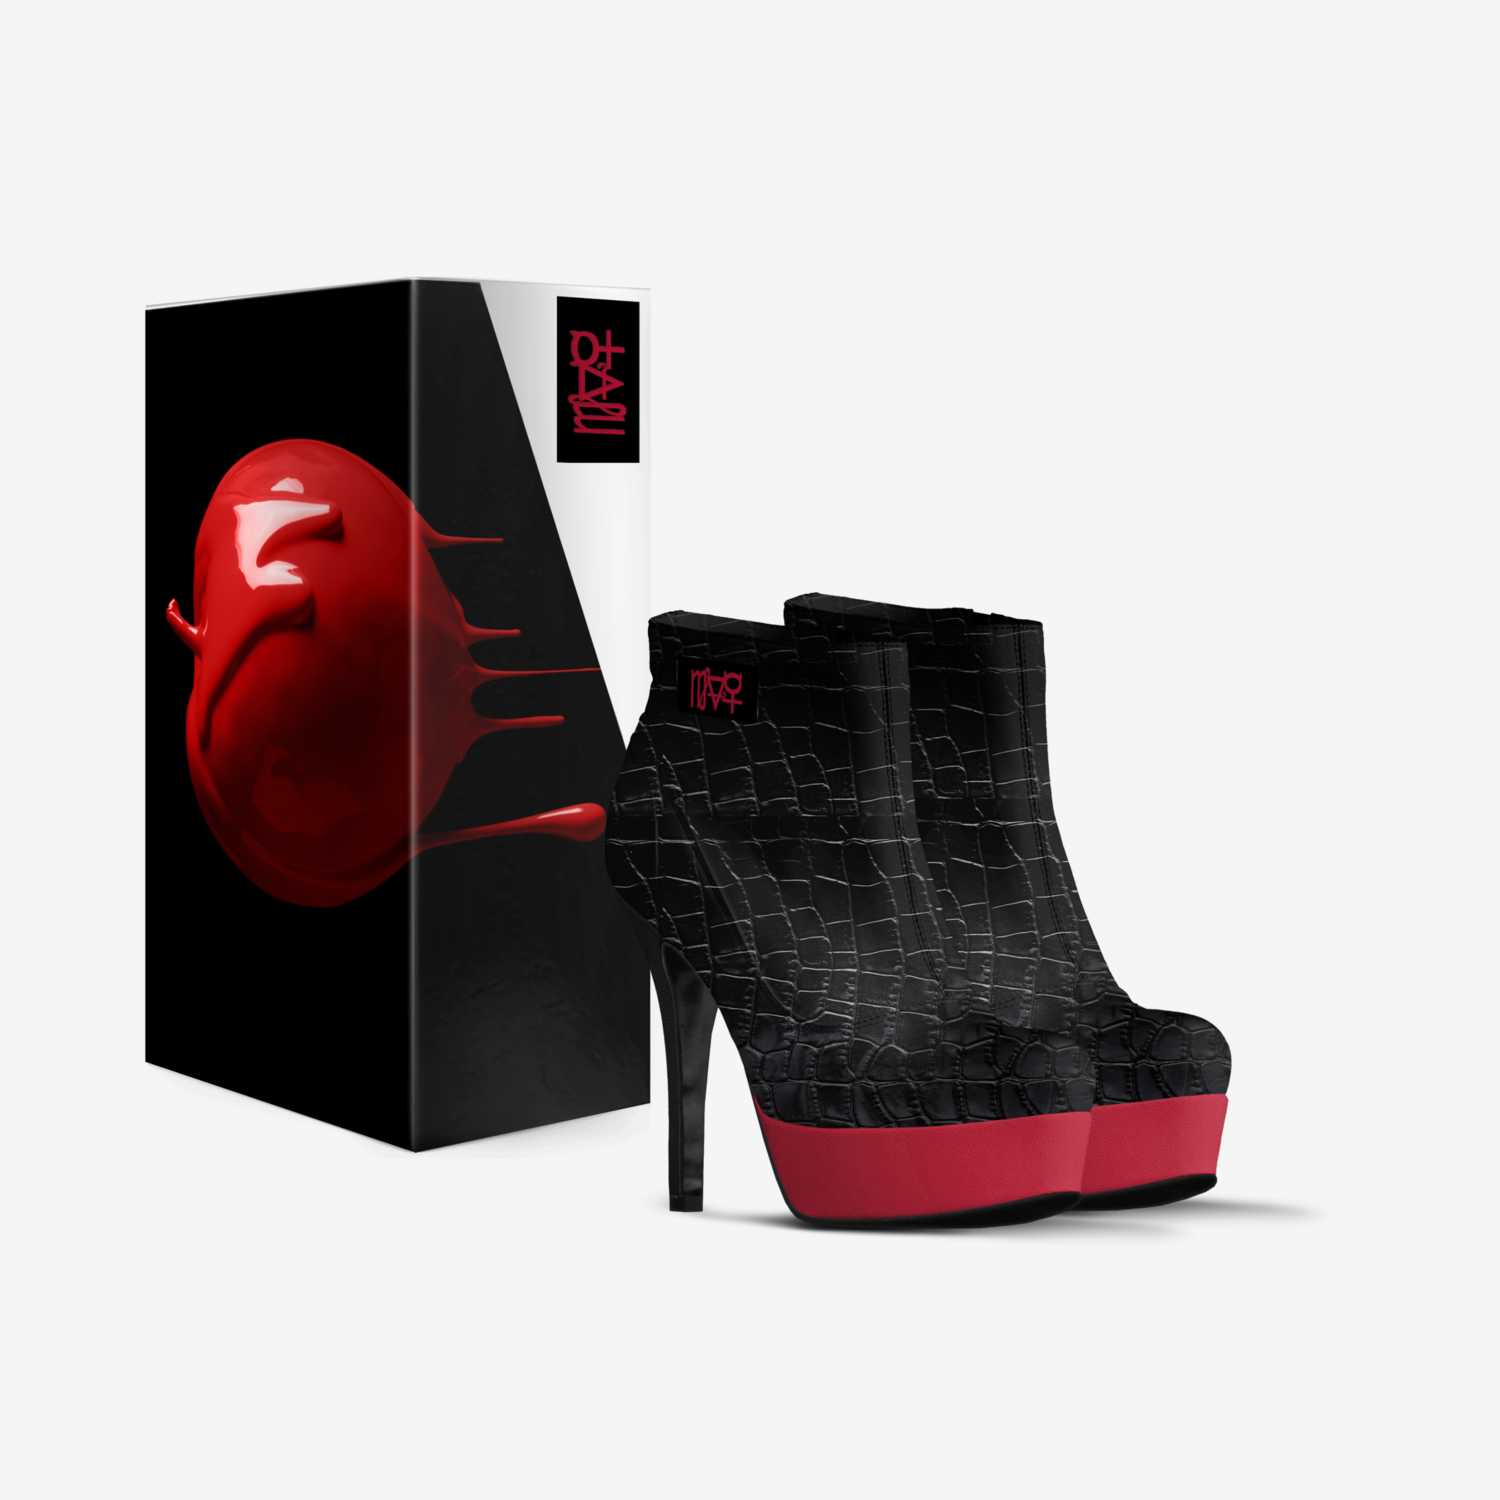 Daalu Ala custom made in Italy shoes by Nataya Domonique | Box view